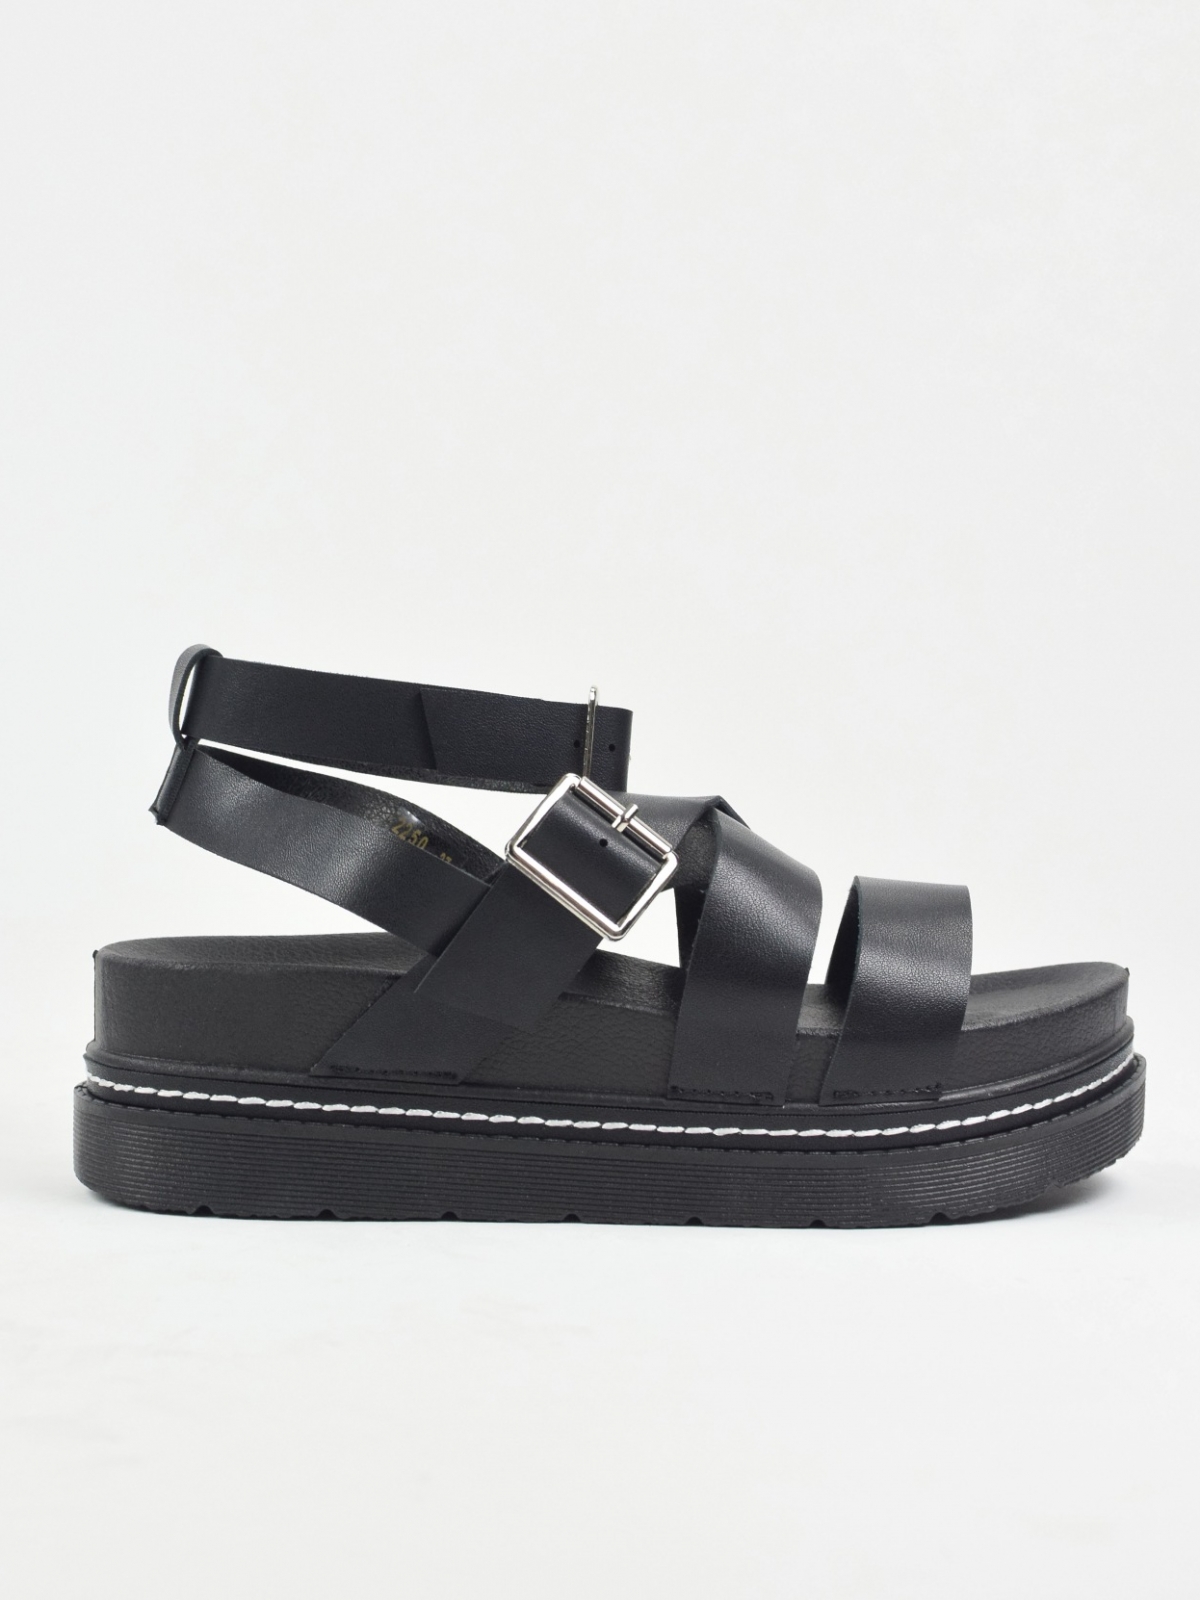 Adjustable sandals with medium platform in black